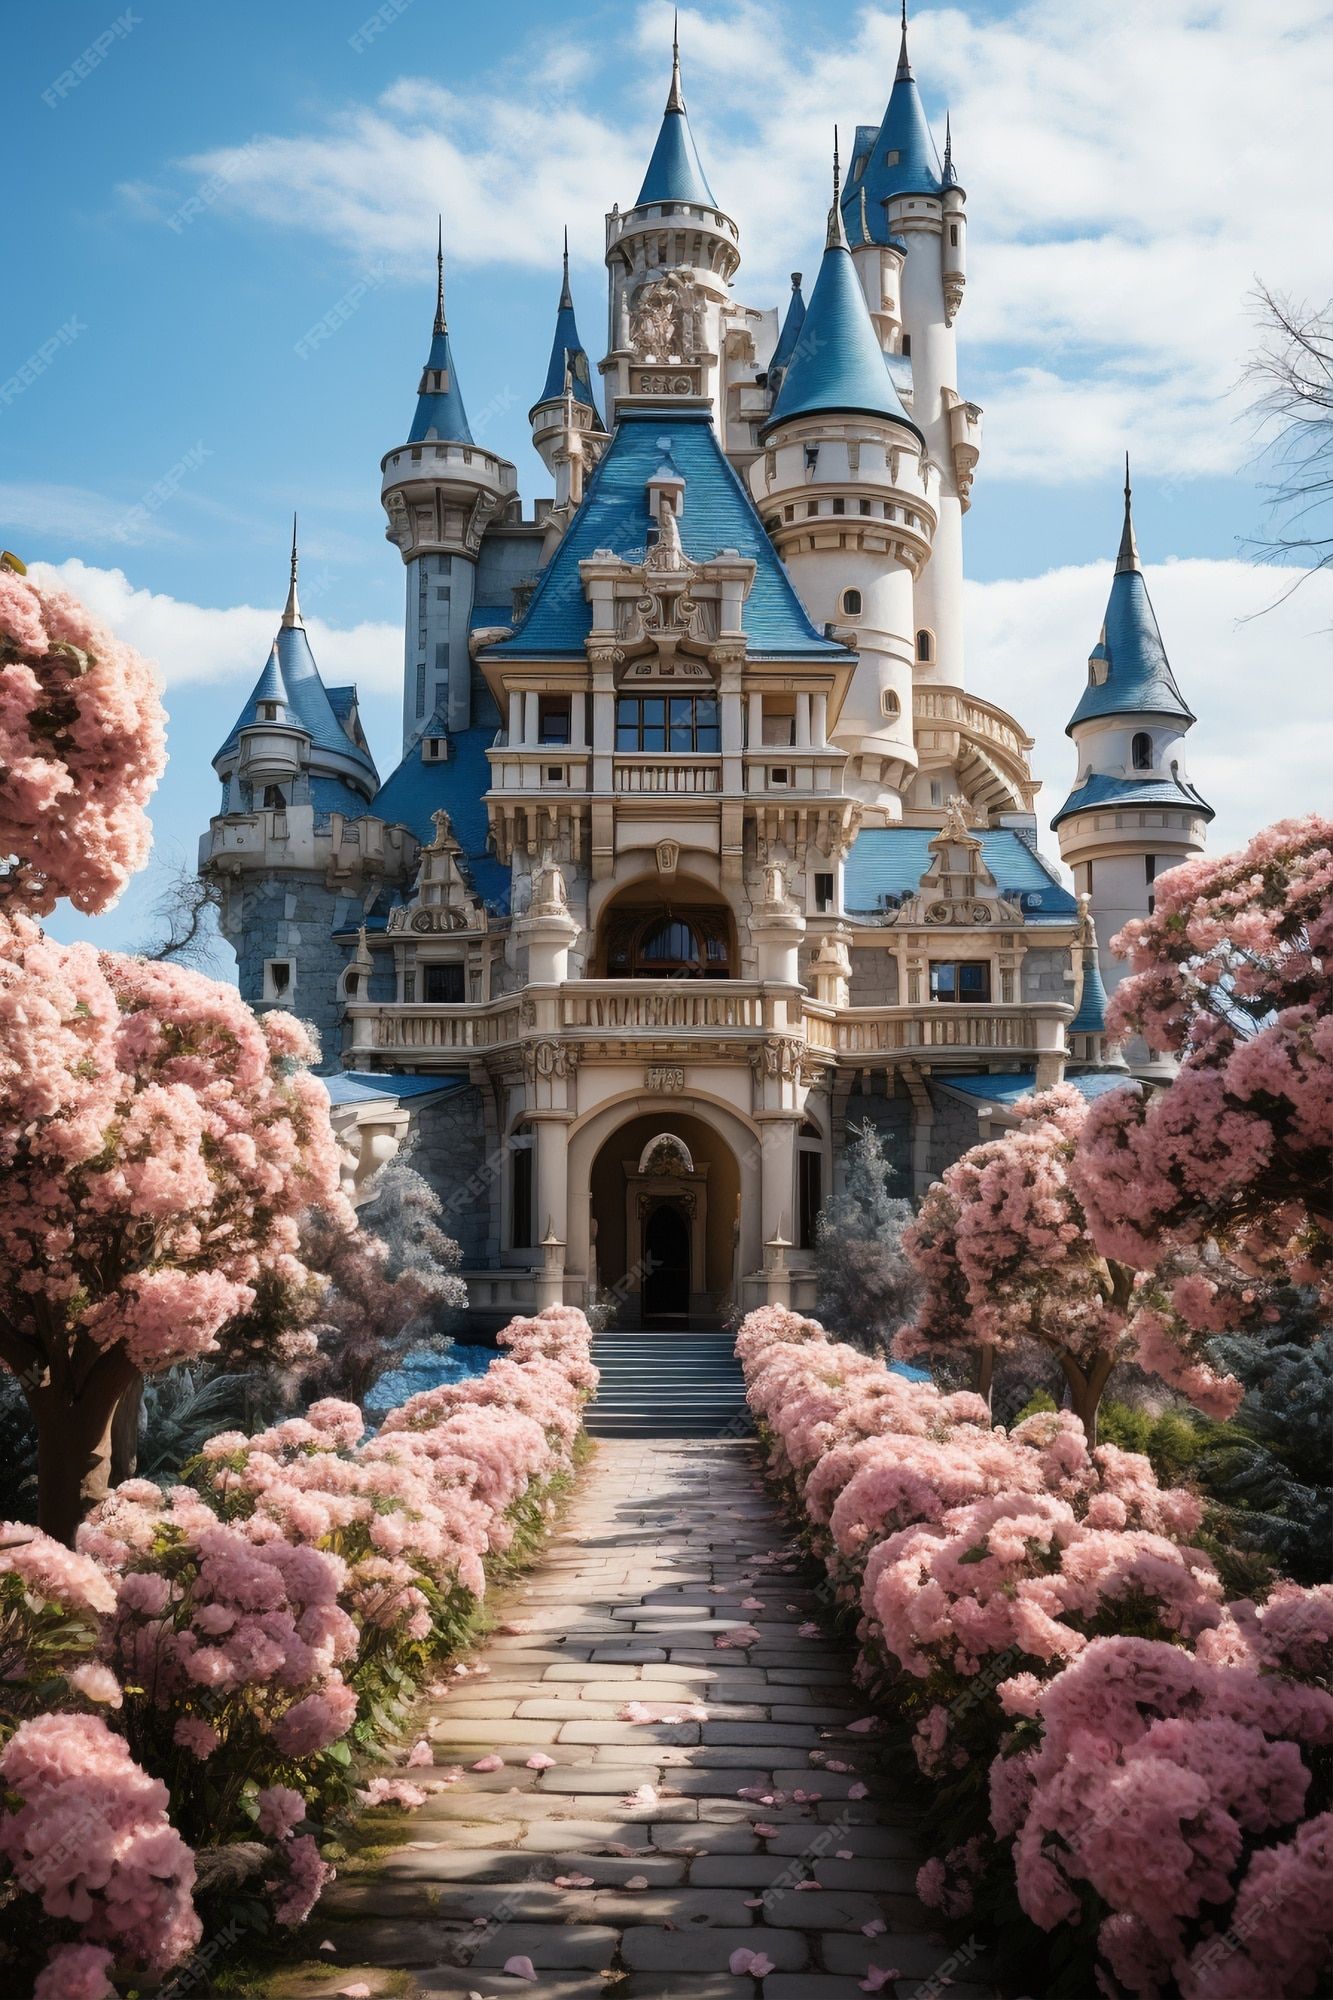 Disneyland Castle Image